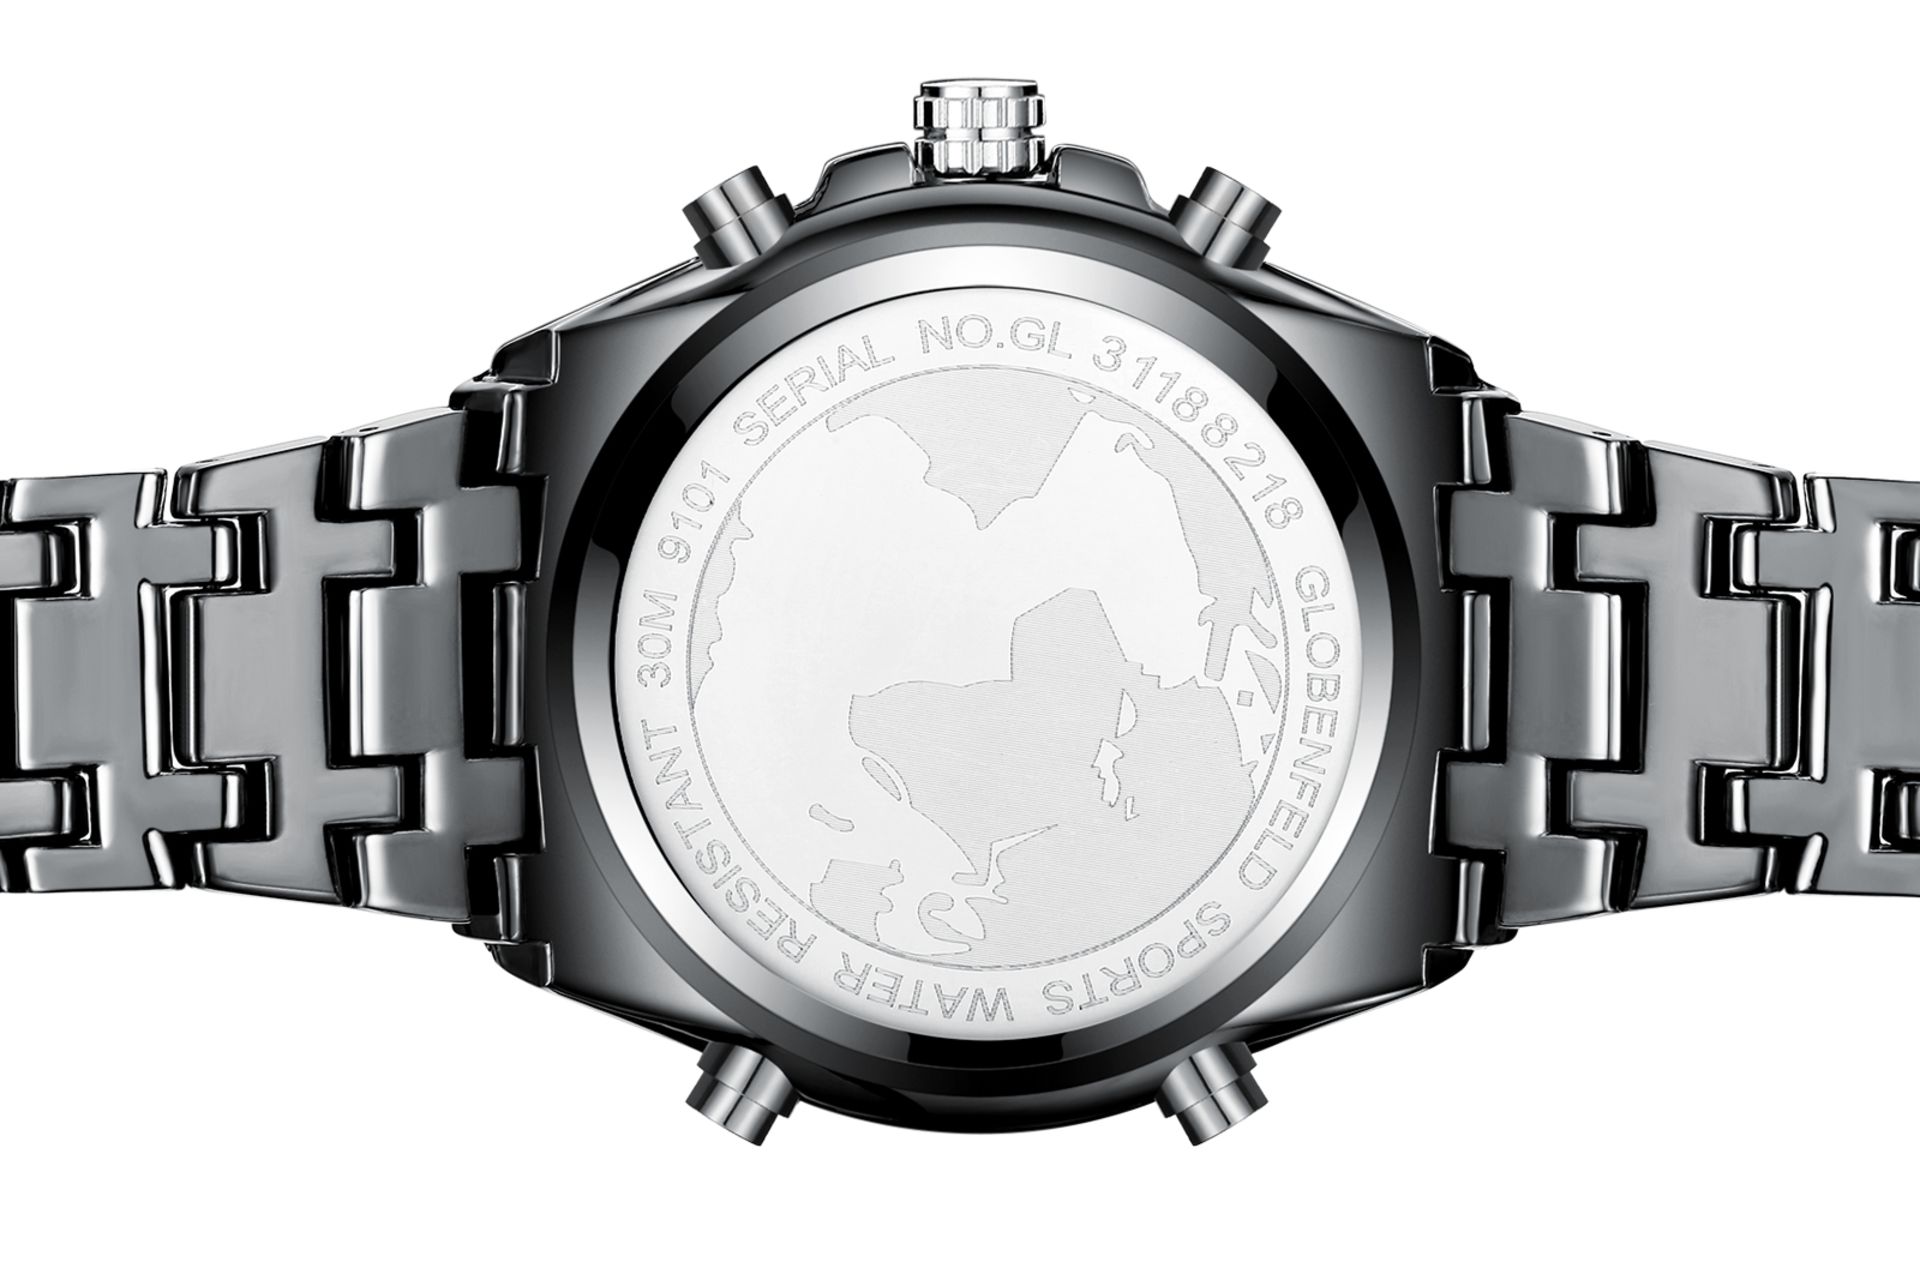 V Brand New Globenfeld Sport Shark Grey Watch - Sony Battery - Stainless Steel Crown - High - Image 4 of 4